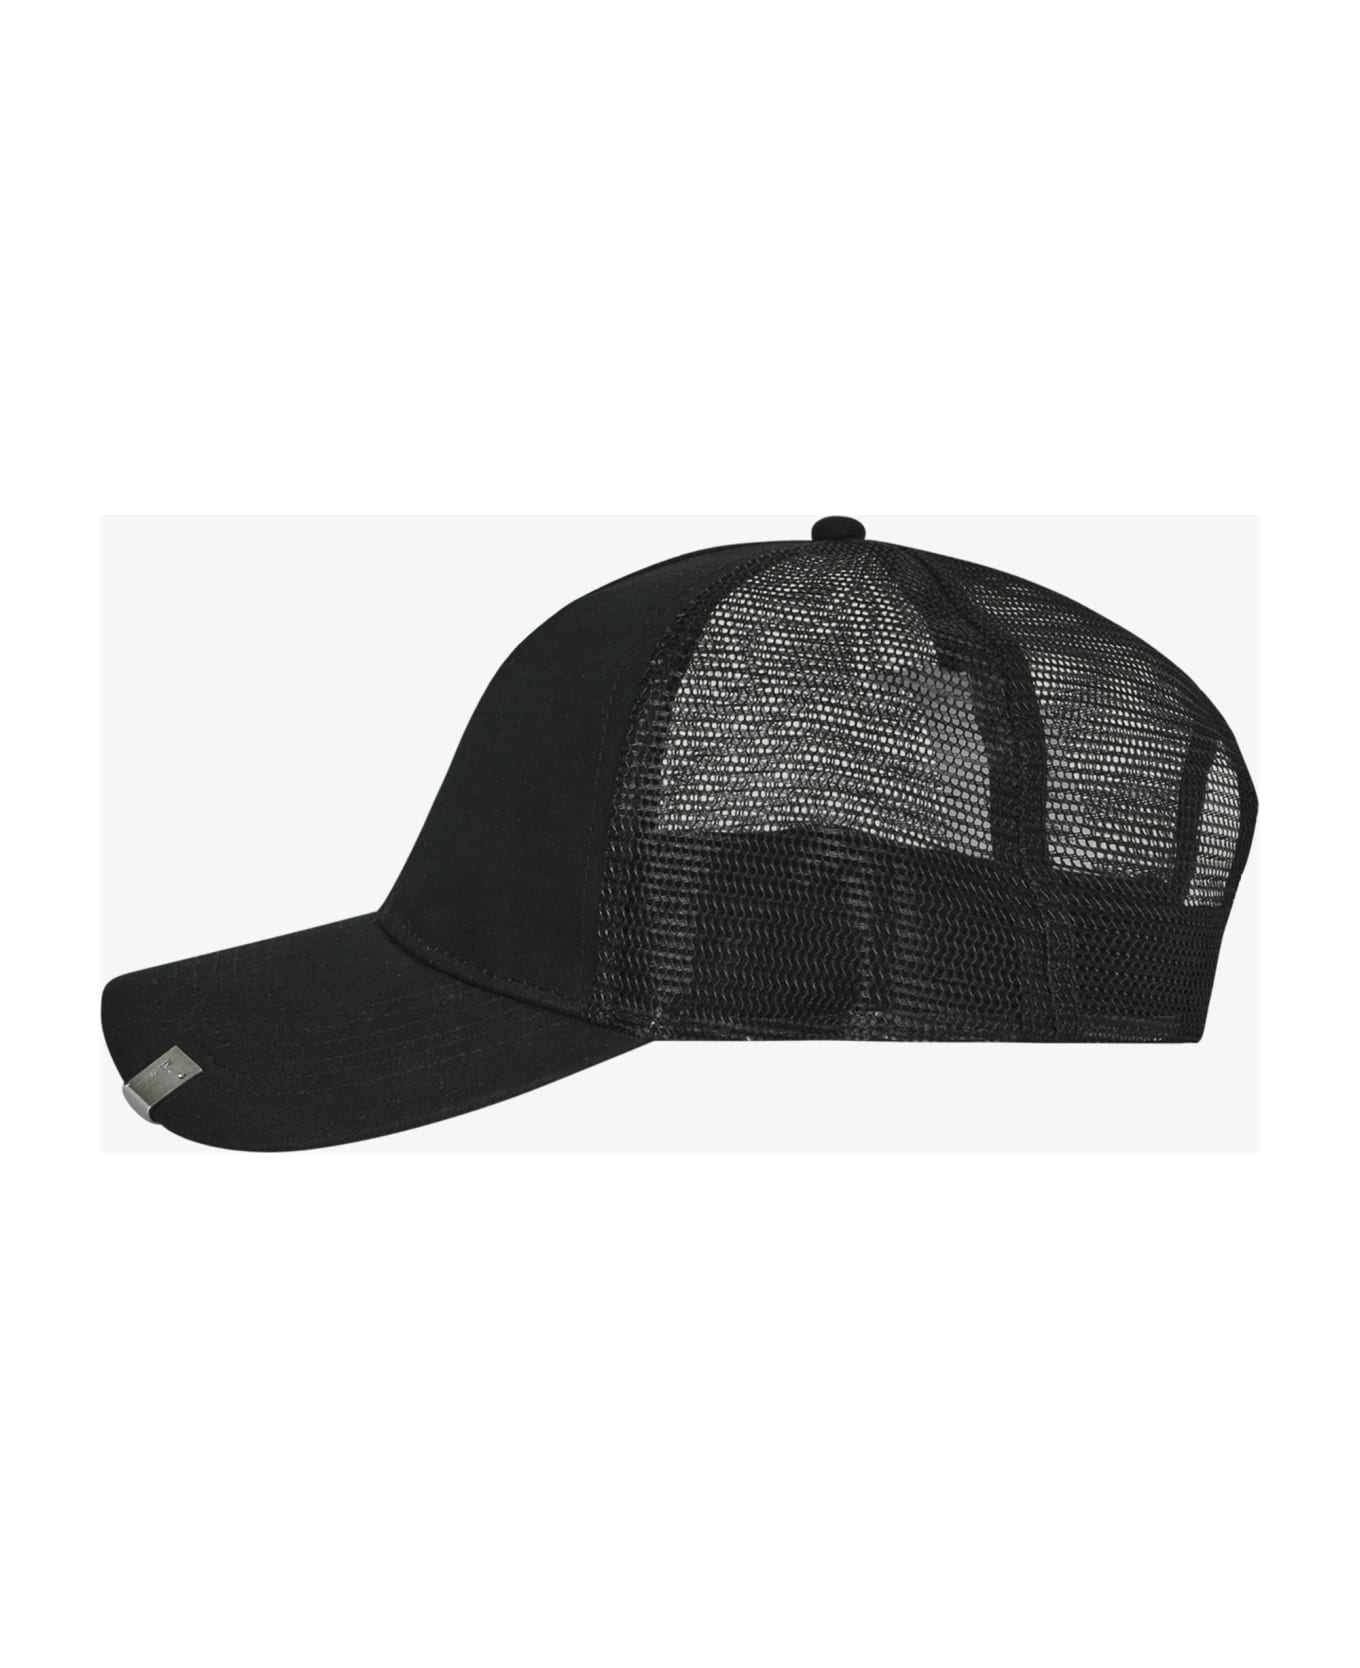 1017 ALYX 9SM Lightercap Trucker Cap Black baseball cap with mesh at back - Lightercap Trucker Cap - Nero